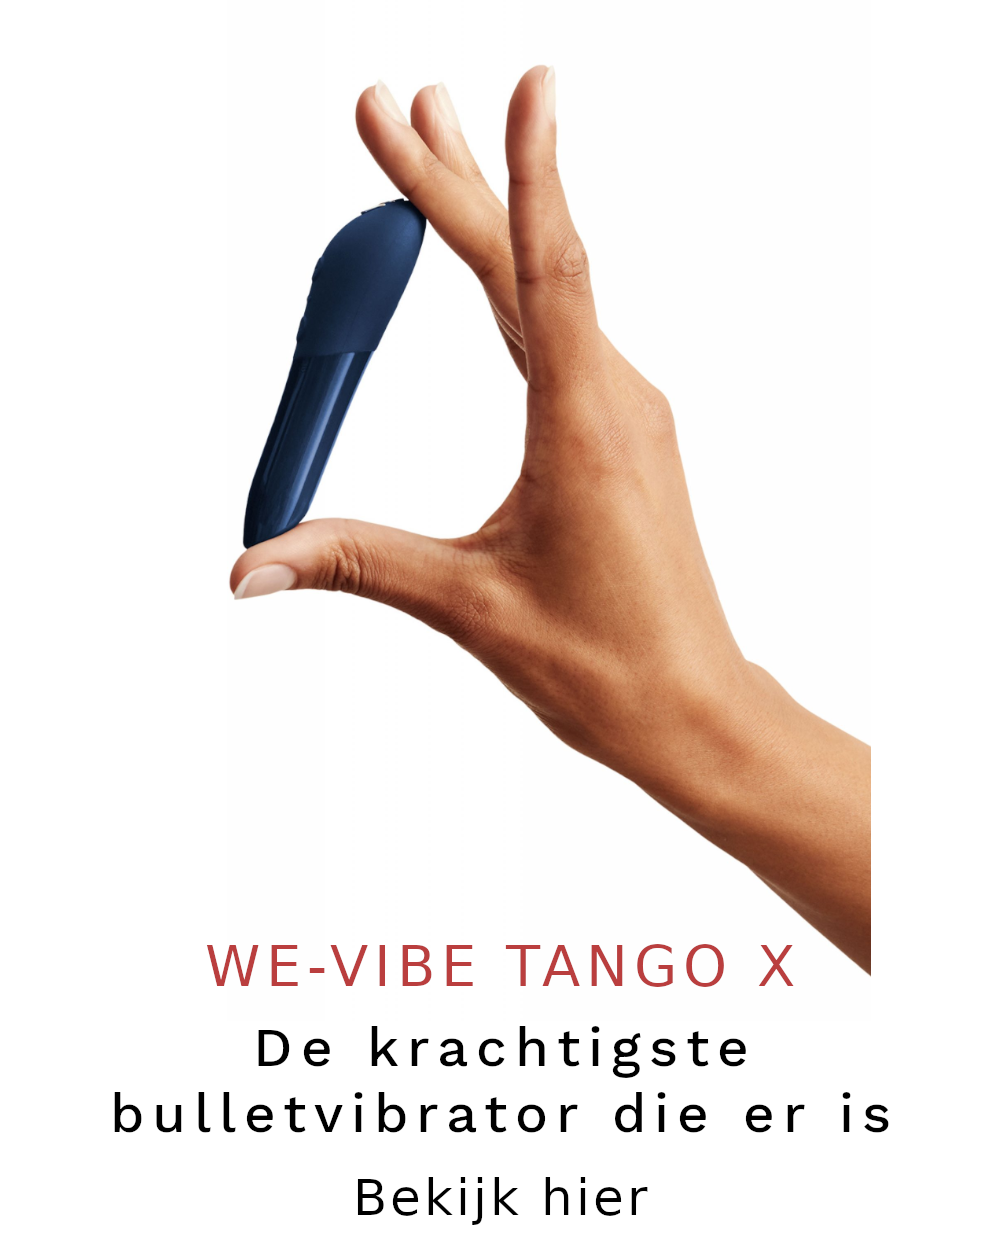 We-vibe tango x bulletvibrator